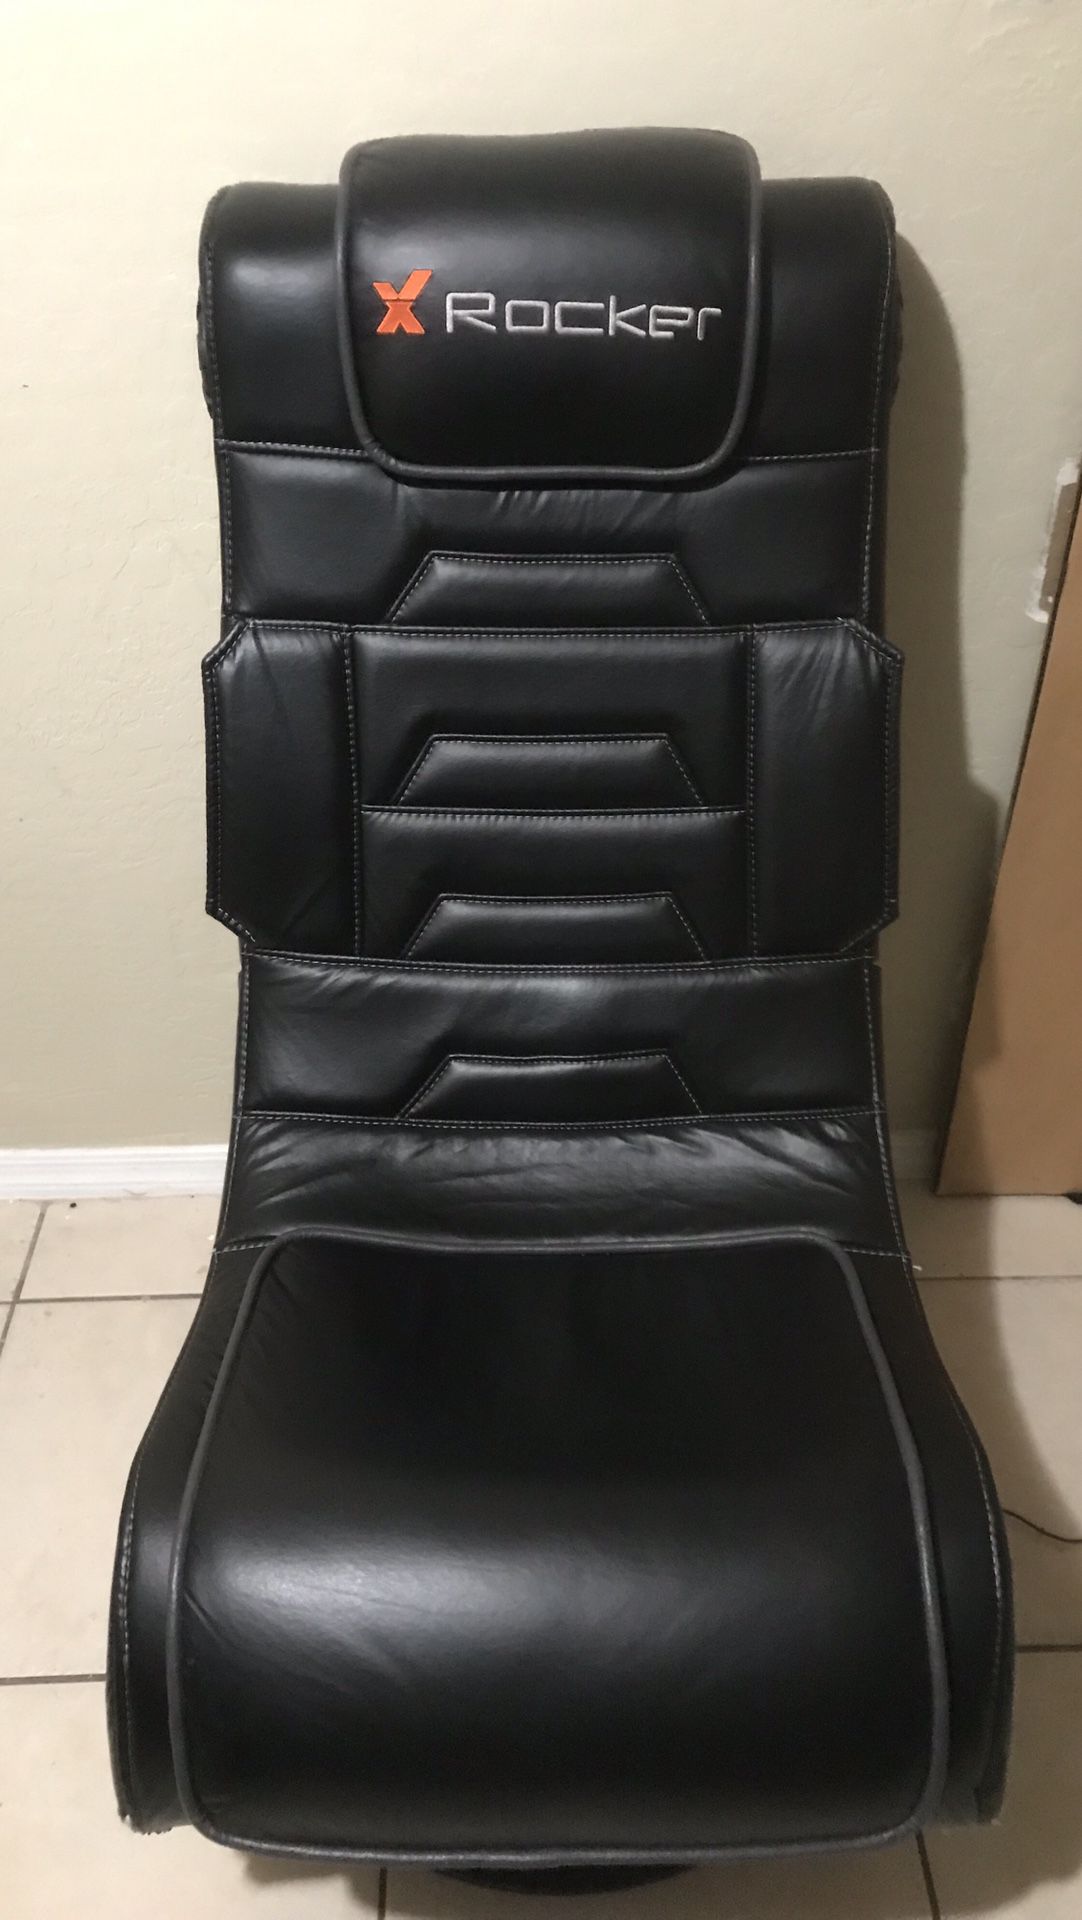 X-Rocker Pro Series Pedestal Audio 2.1 Wireless Gaming Chair, Black